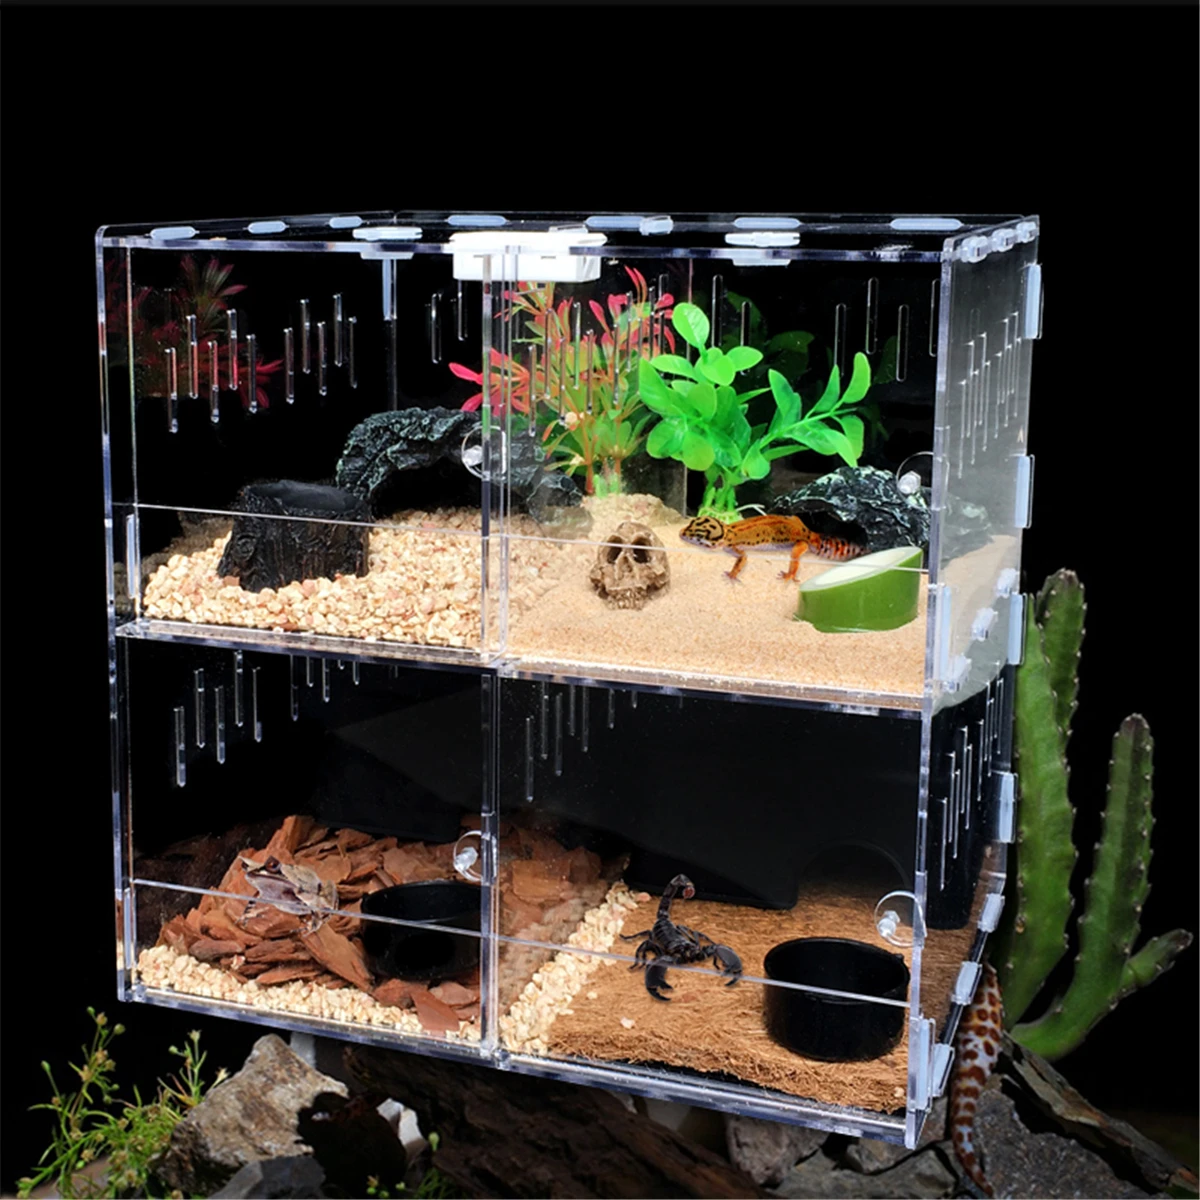 Balacoo Mantis Breeding Box Acrylic Reptile Feeding Box Insect Creeper House Terrarium Containers for Mini Pet Animal 